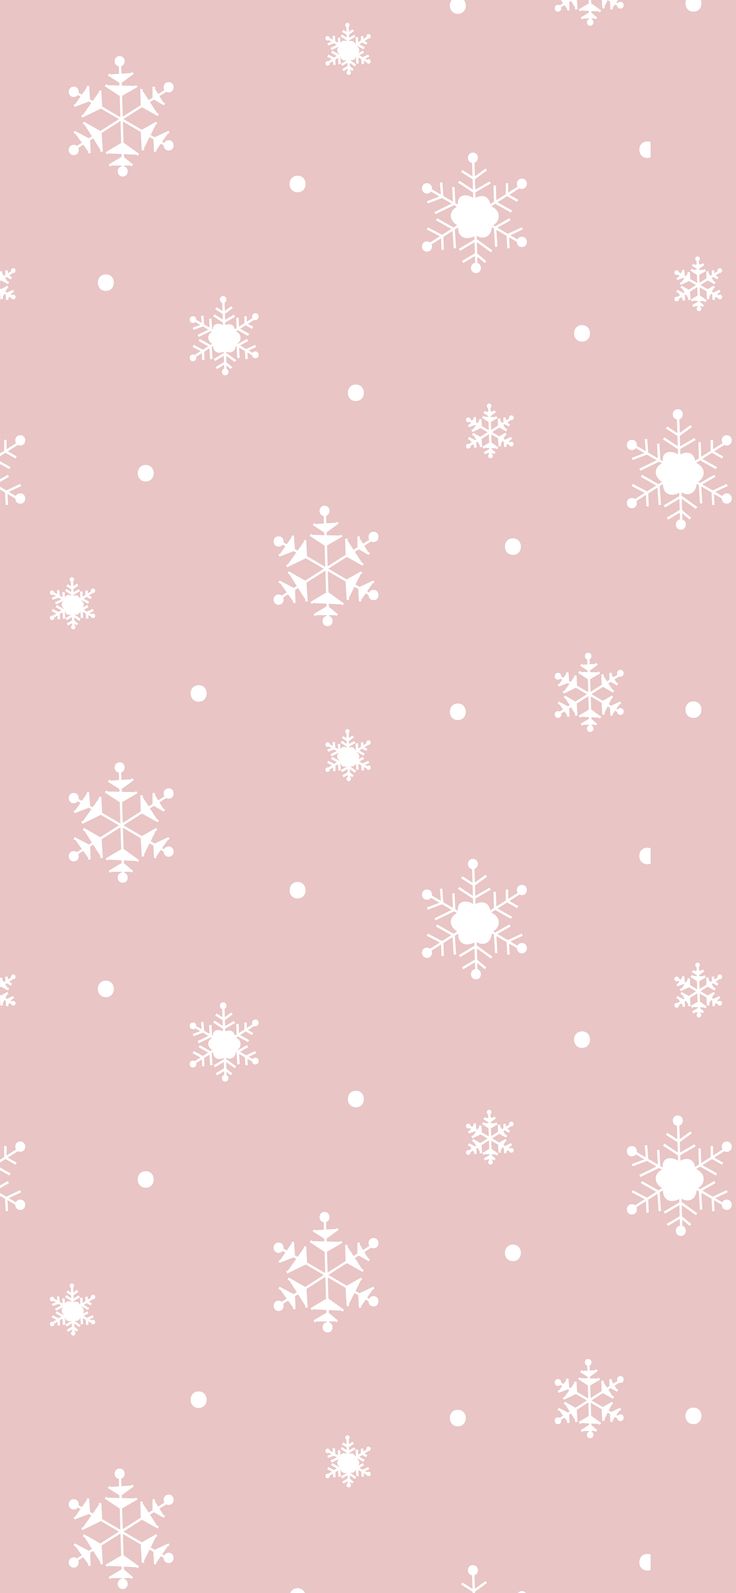 Cute Pink Snow Pattern iPhone Wallpaper. Christmas phone wallpaper, Wallpaper iphone christmas, iPhone wallpaper winter